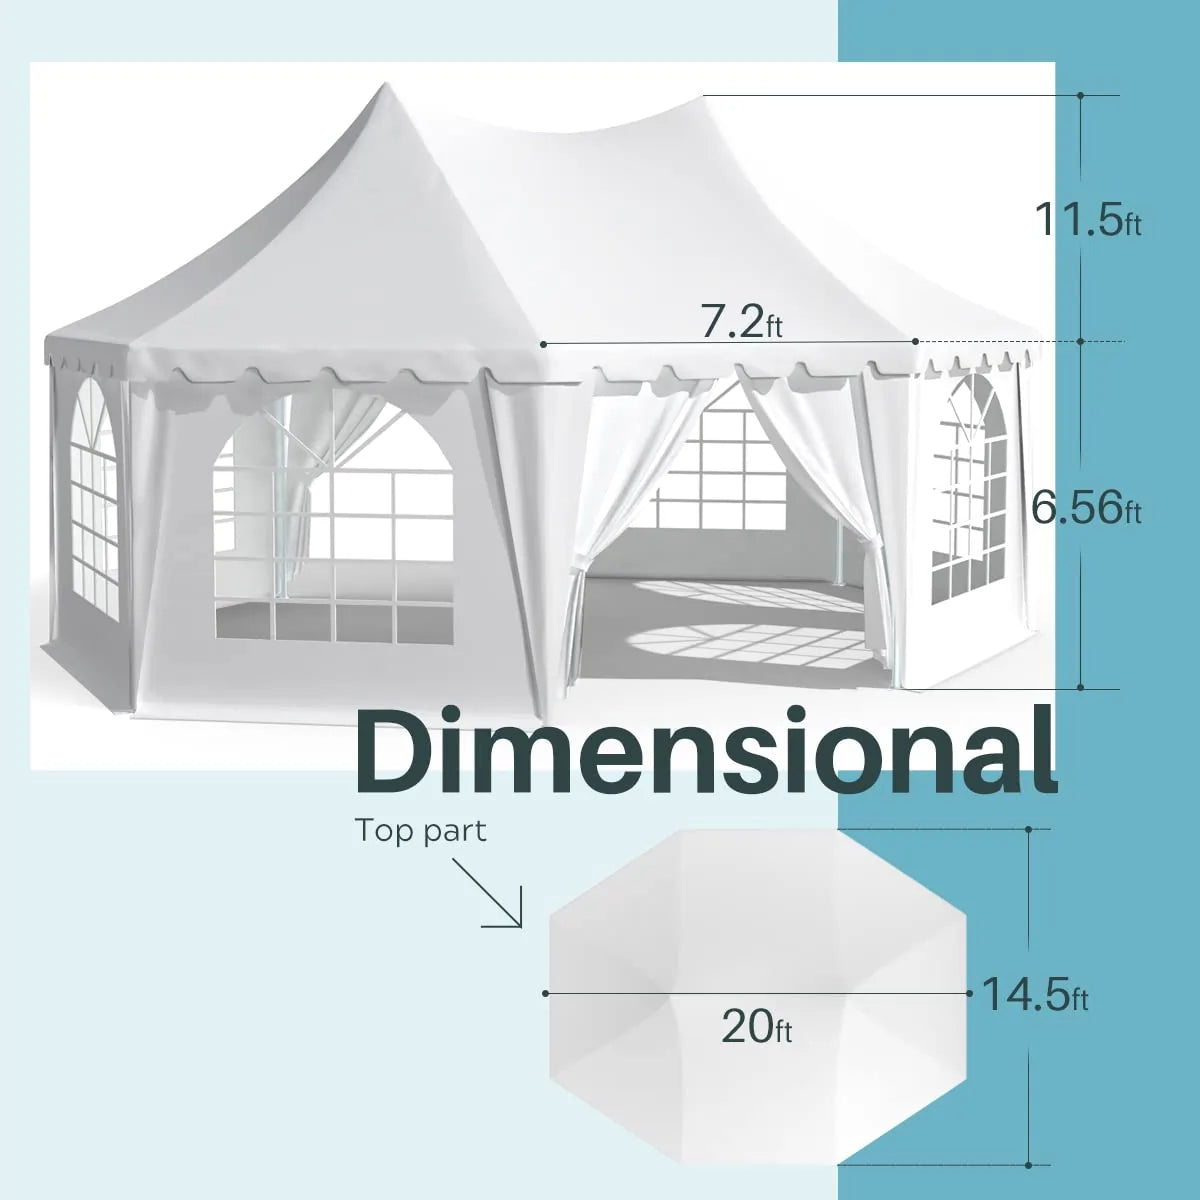 20' x 14.5' Octagonal Party Tent Size